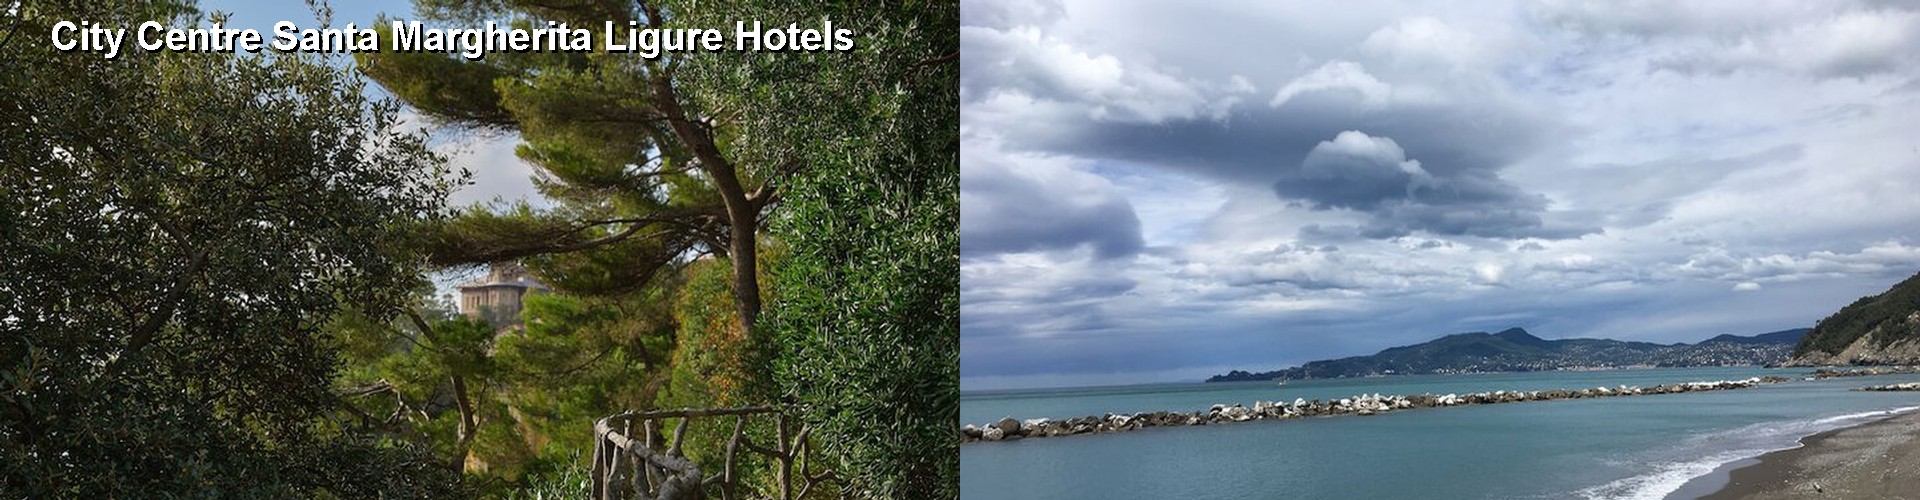 5 Best Hotels near City Centre Santa Margherita Ligure